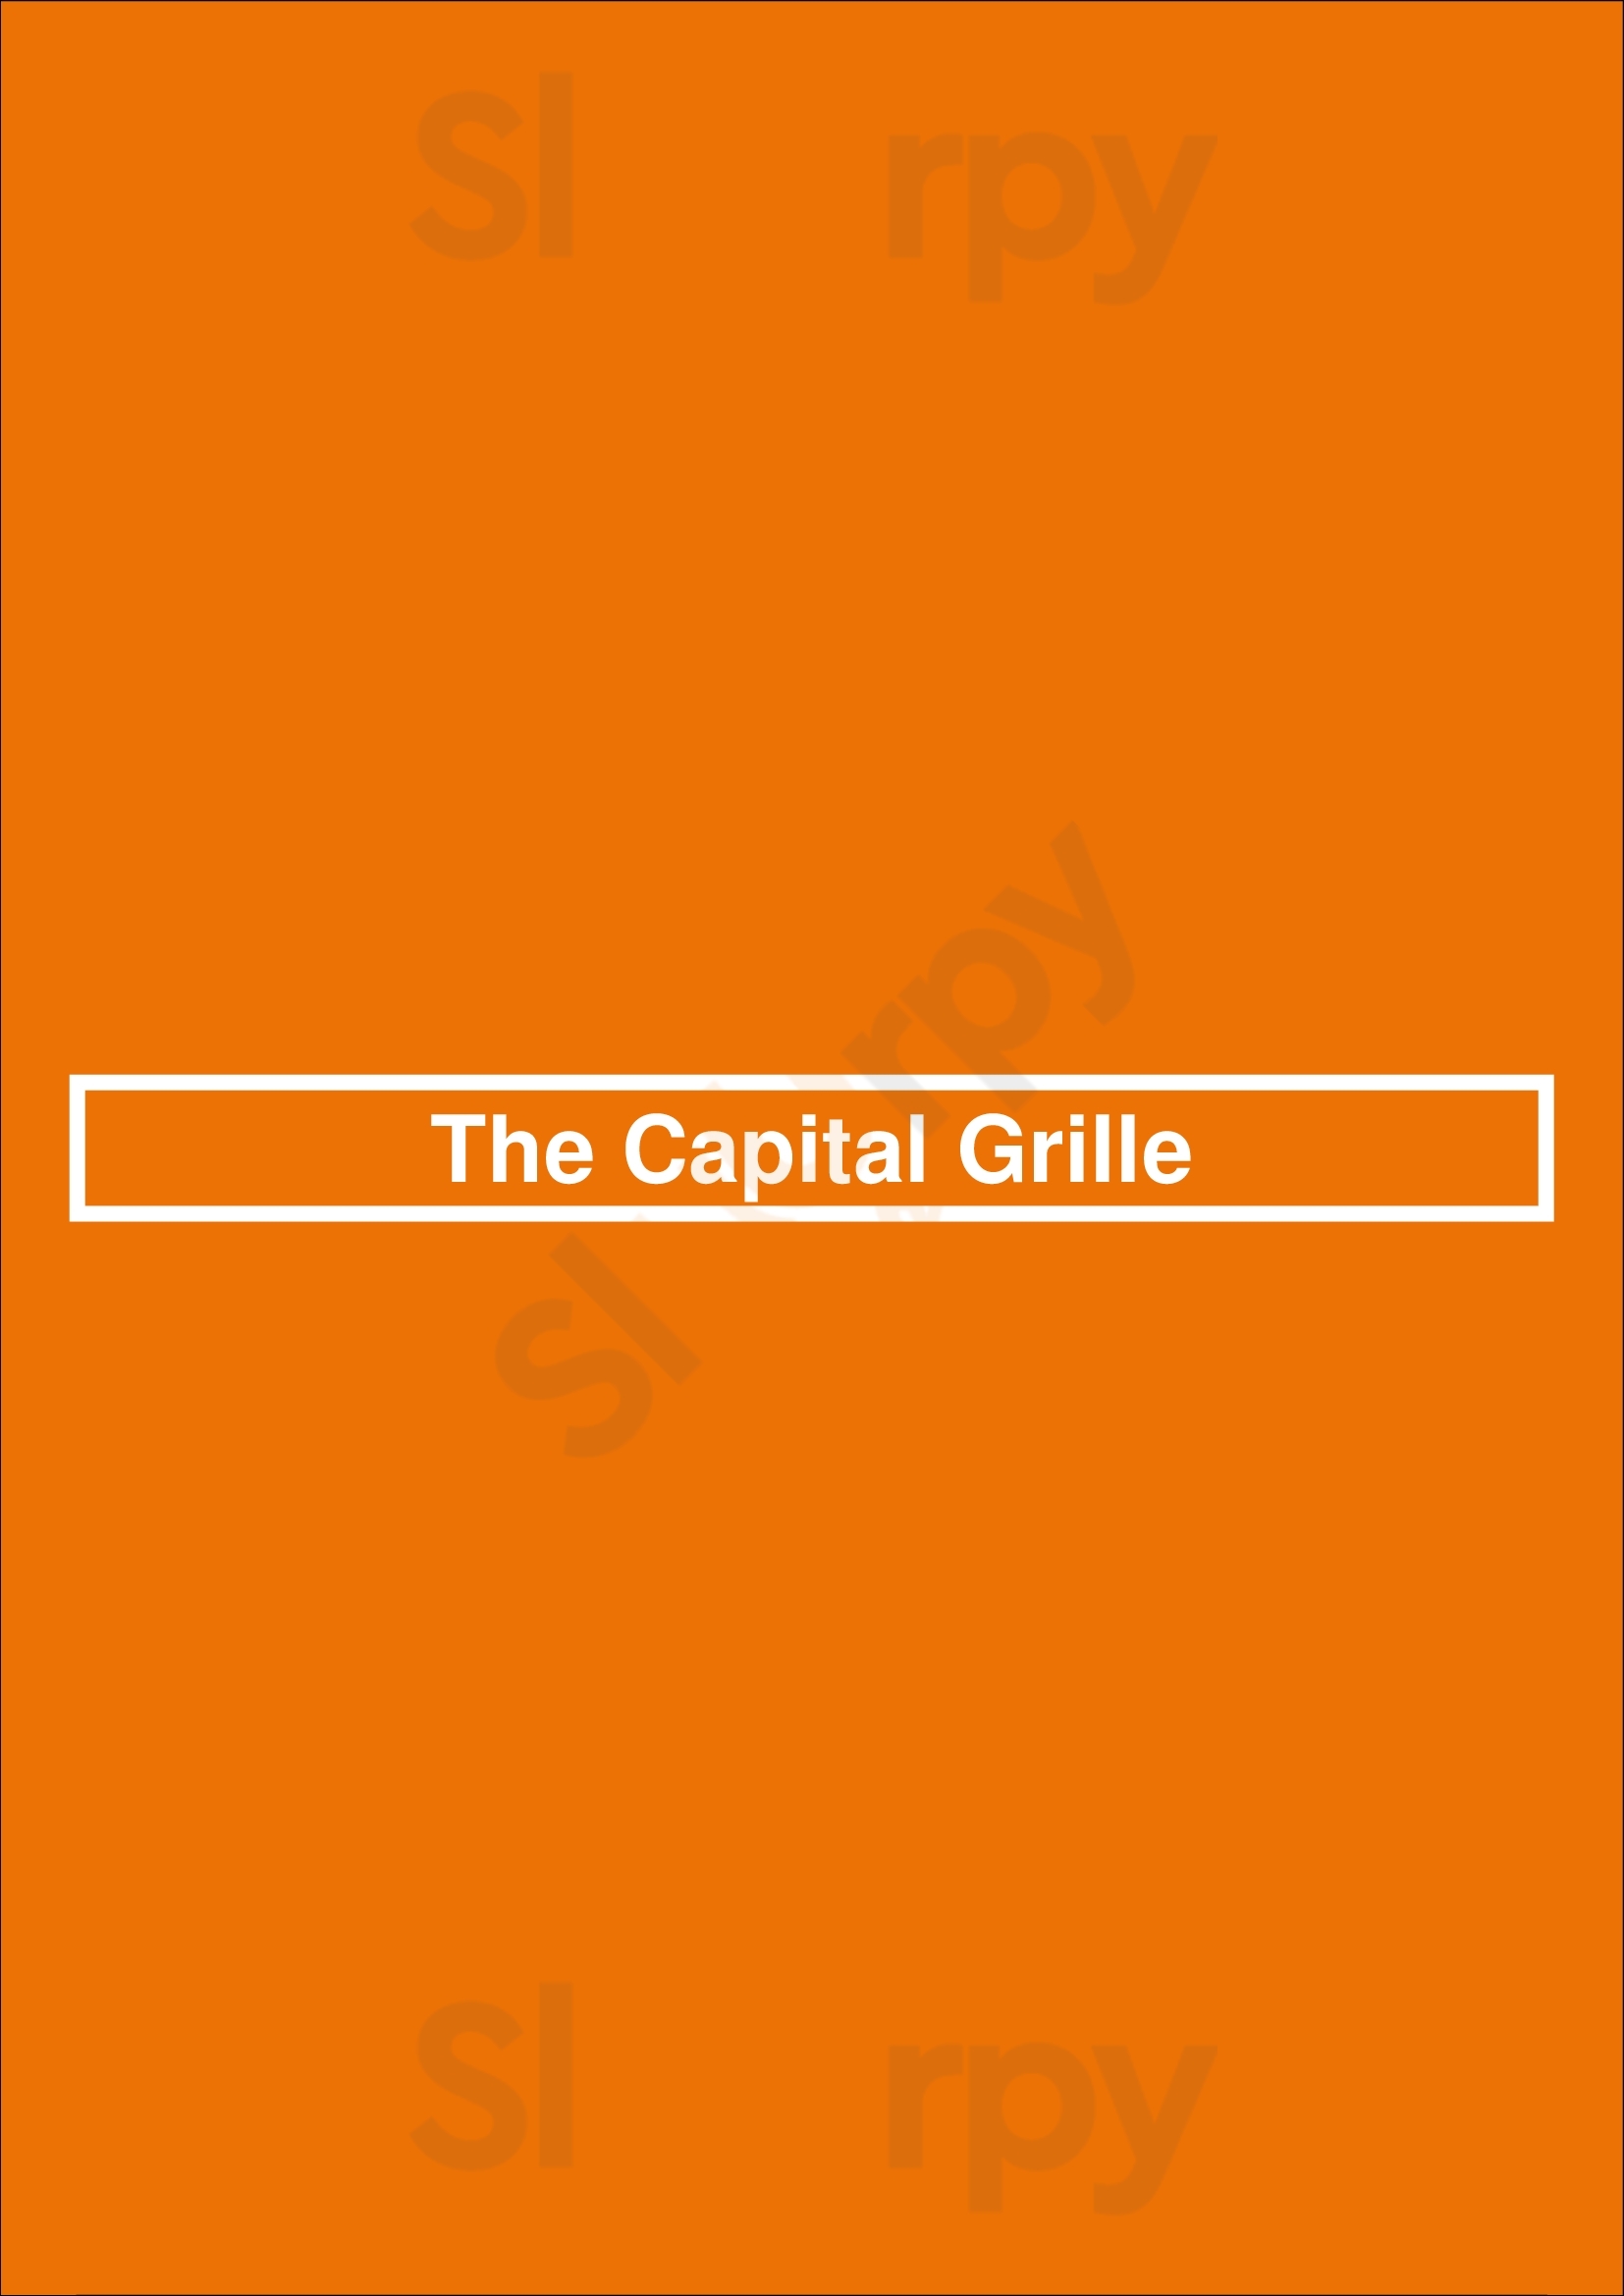 The Capital Grille Washington DC Menu - 1